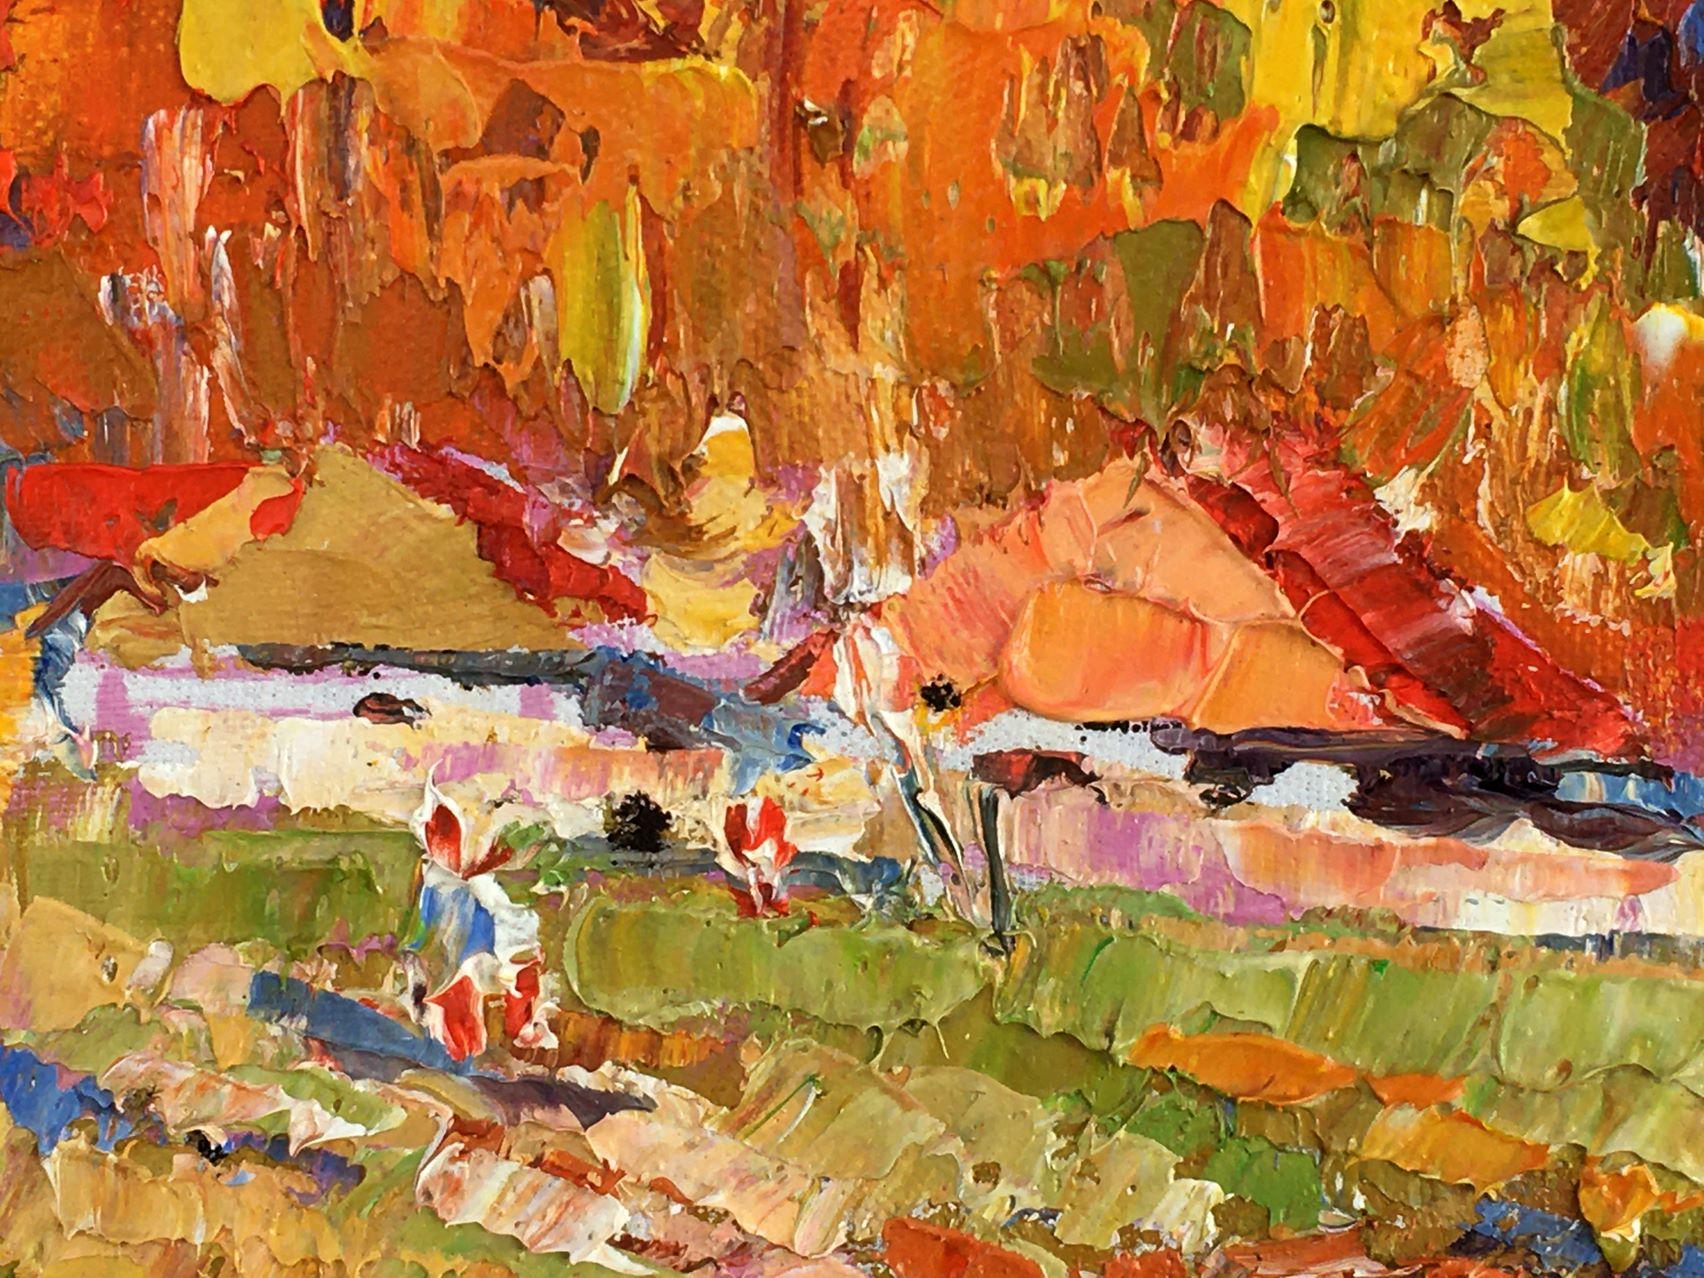 Artist: Alex Kalenyuk 
Work: Original oil painting, handmade artwork, one of a kind 
Medium: Oil on canvas 
Year: 2016
Style: Impressionism
Title: Autumn Day
Size: 6